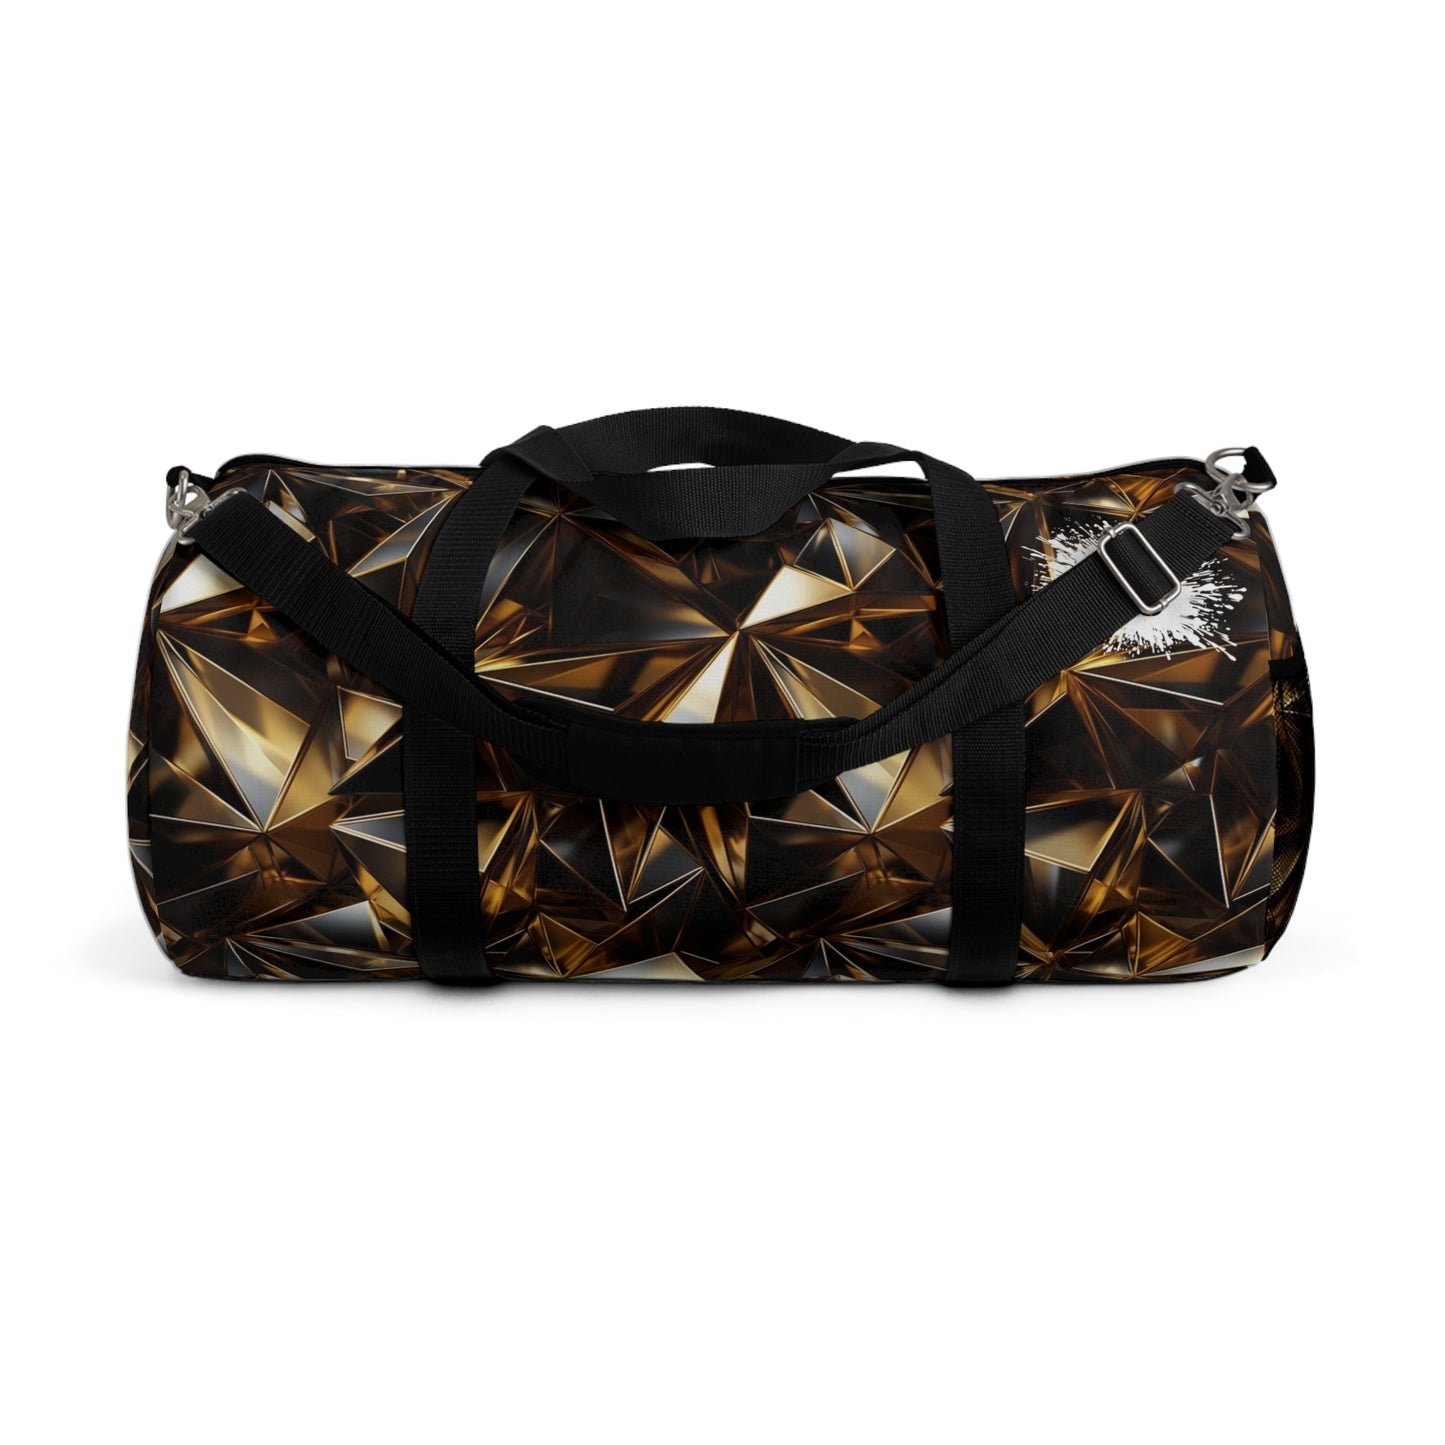 Black & Gold Jewels Duffel Bag